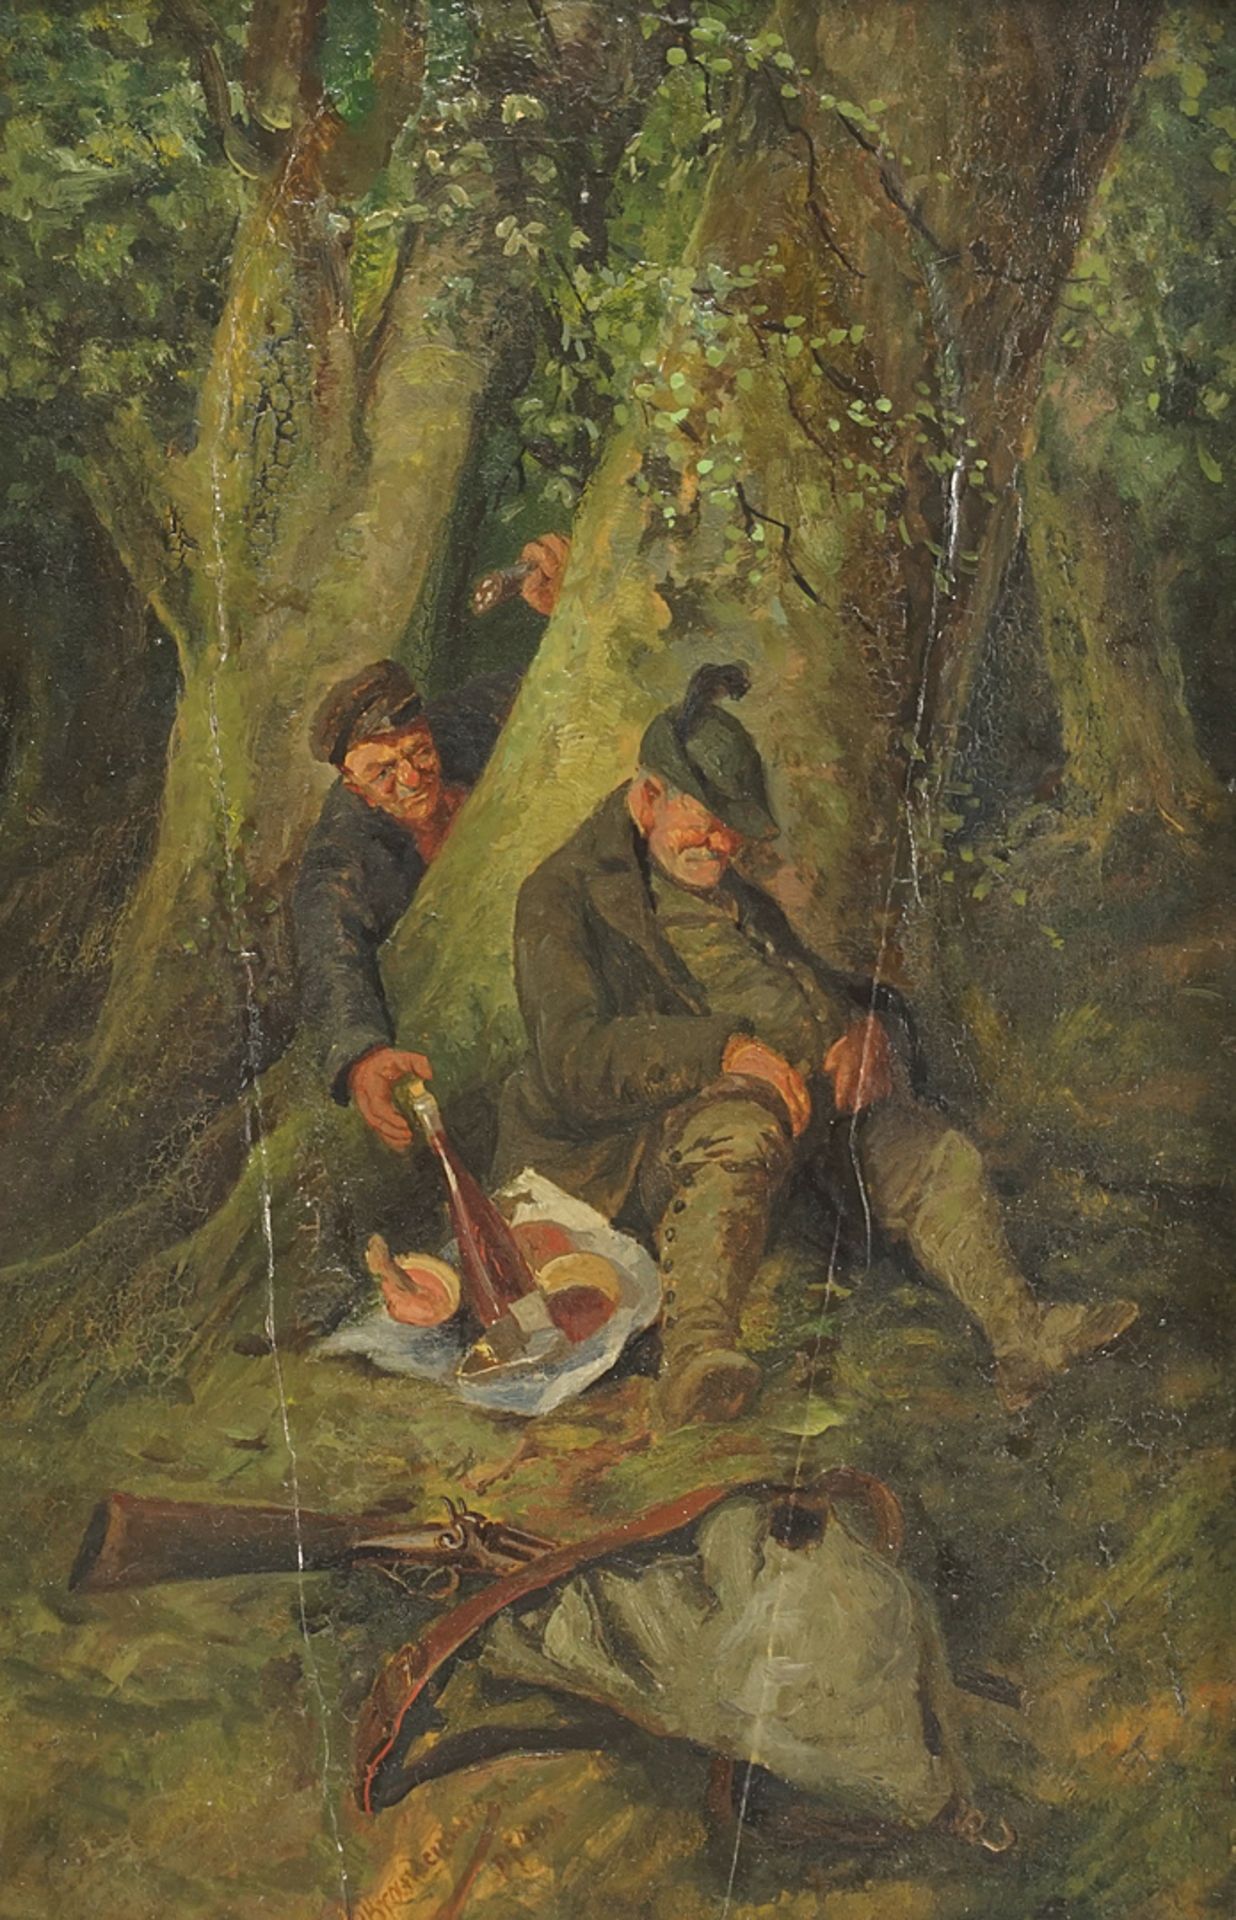 Paul Brandenburg (1866-1925), Hunters during Midday Rest